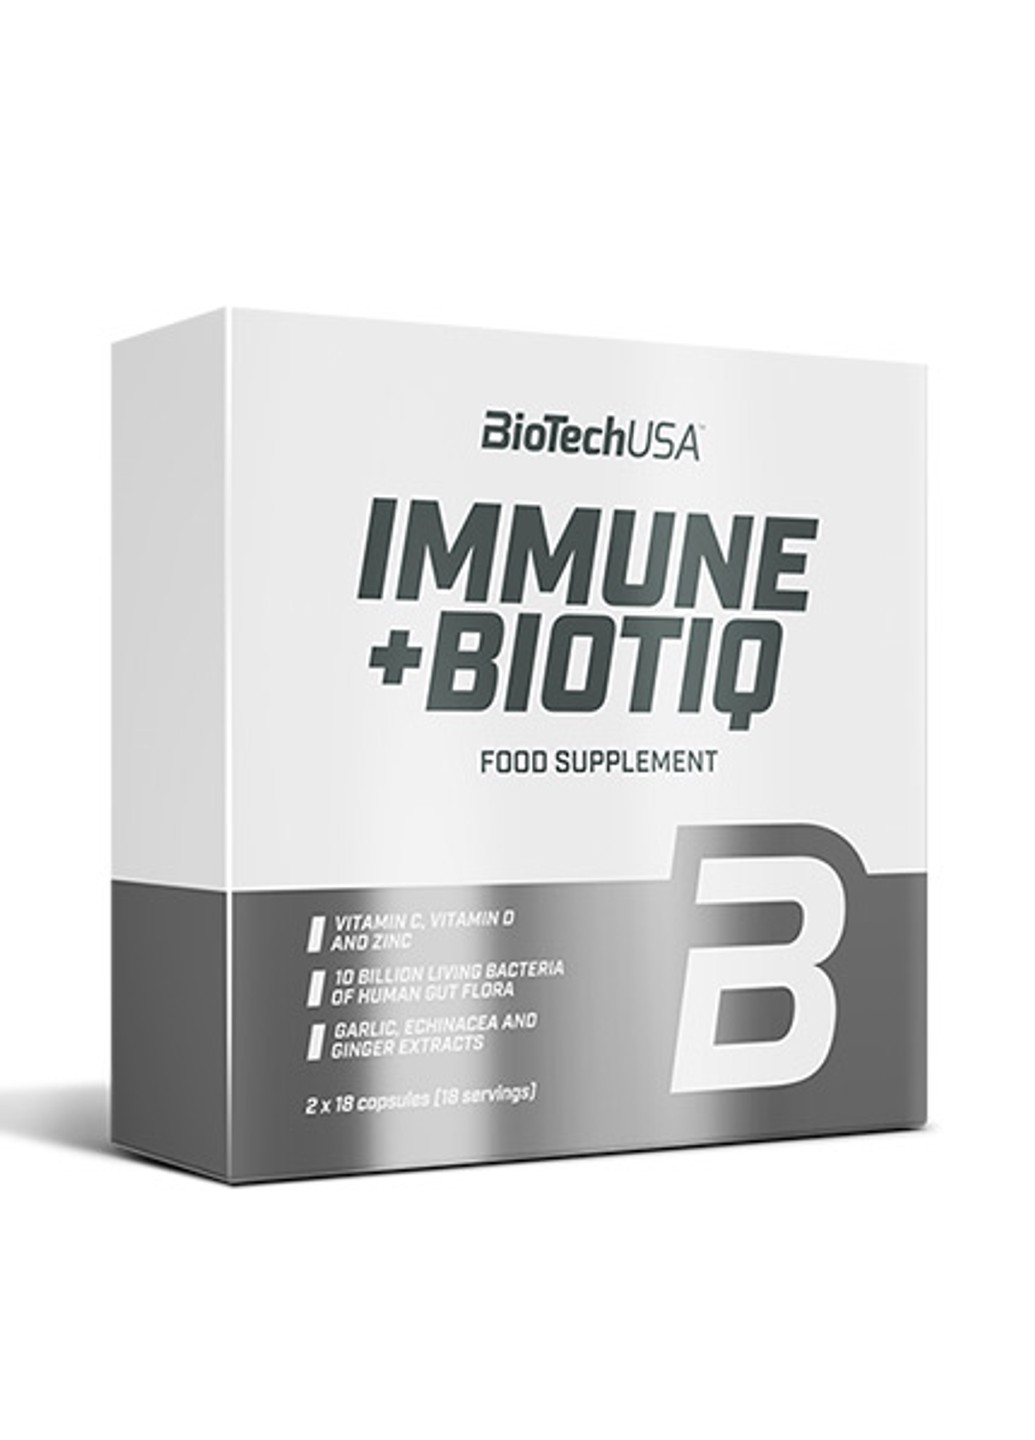 Комплекс витаминов и минералов BioTech Immune + Biotiq 18 + 18 капсул Biotechusa (255407444)